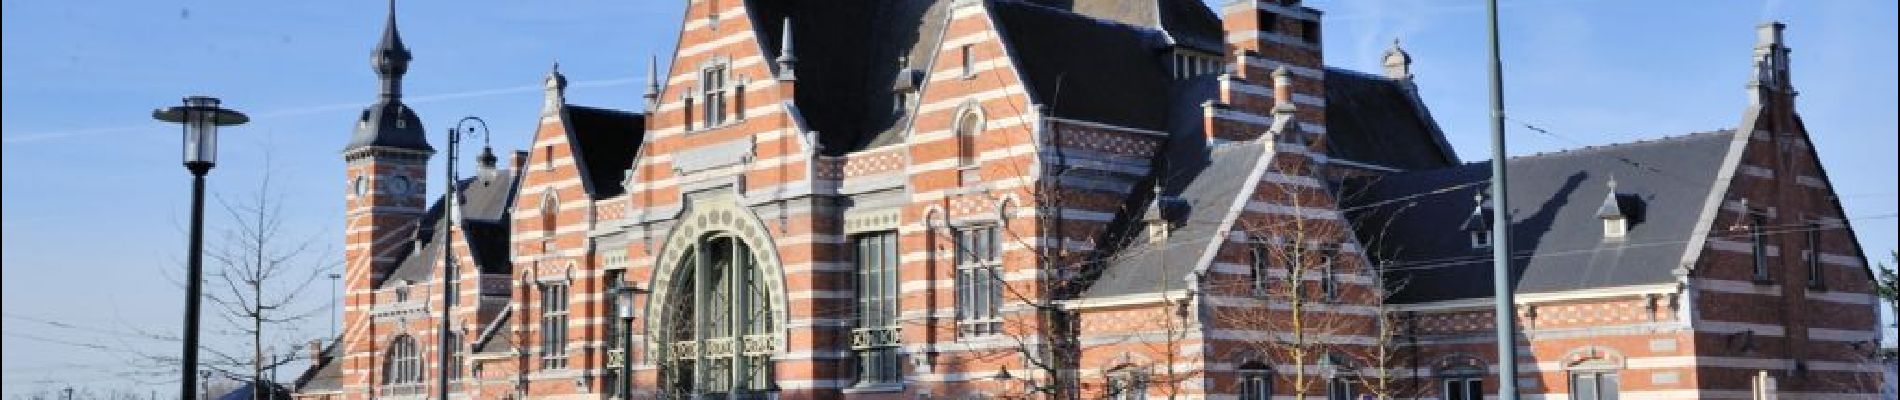 Point d'intérêt Schaerbeek - Gare de Schaerbeek - Photo